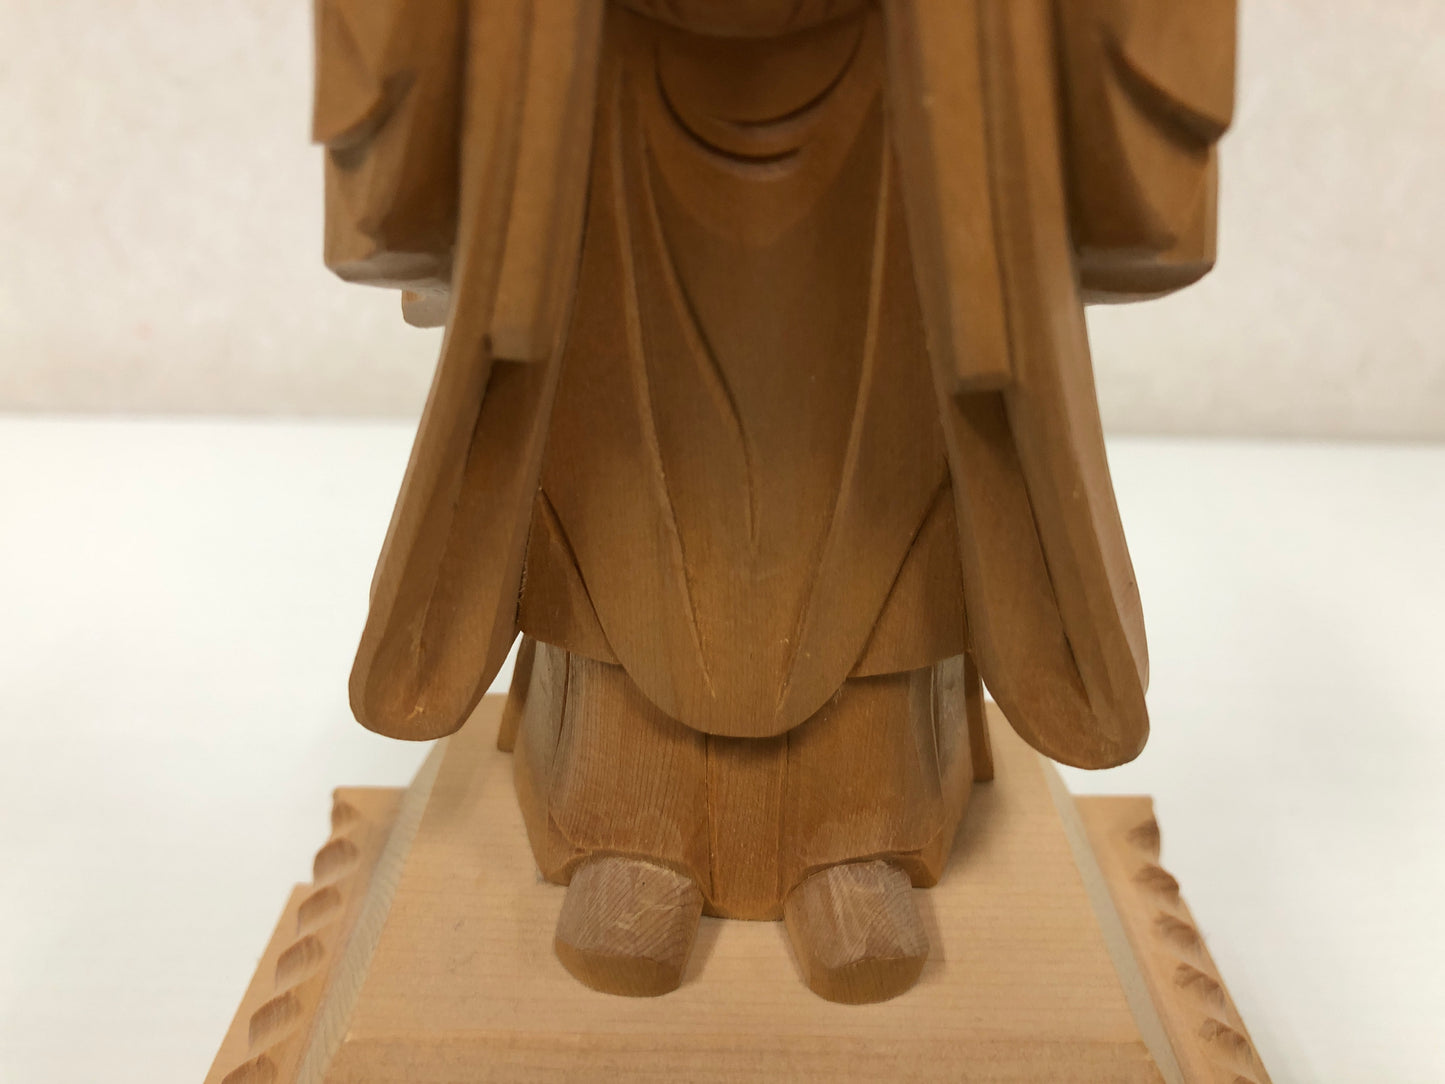 Y4020 STATUE Buddha figure plain wood carving Japan antique Buddhist art